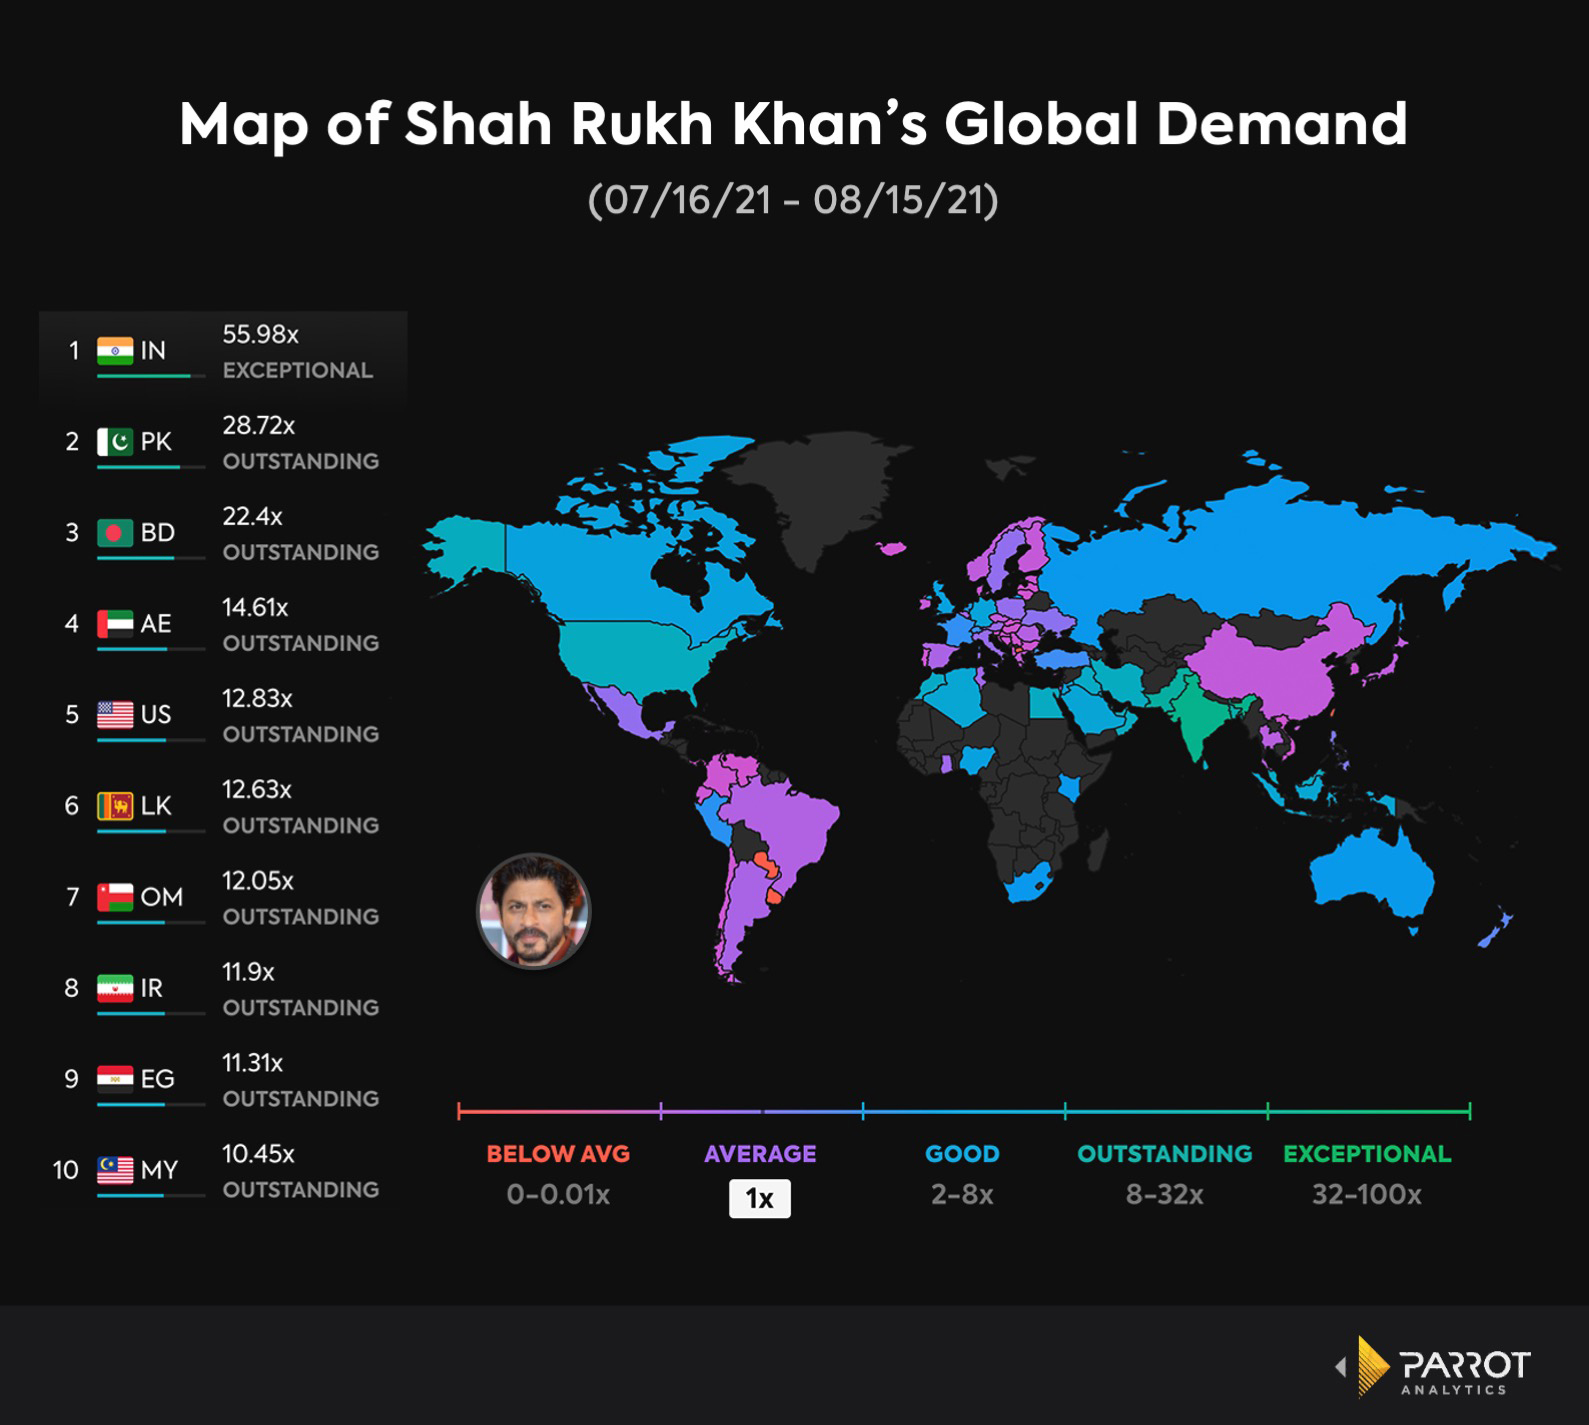 Parrot_Map of Shah Rukh Khan’s Global Demand.jpg